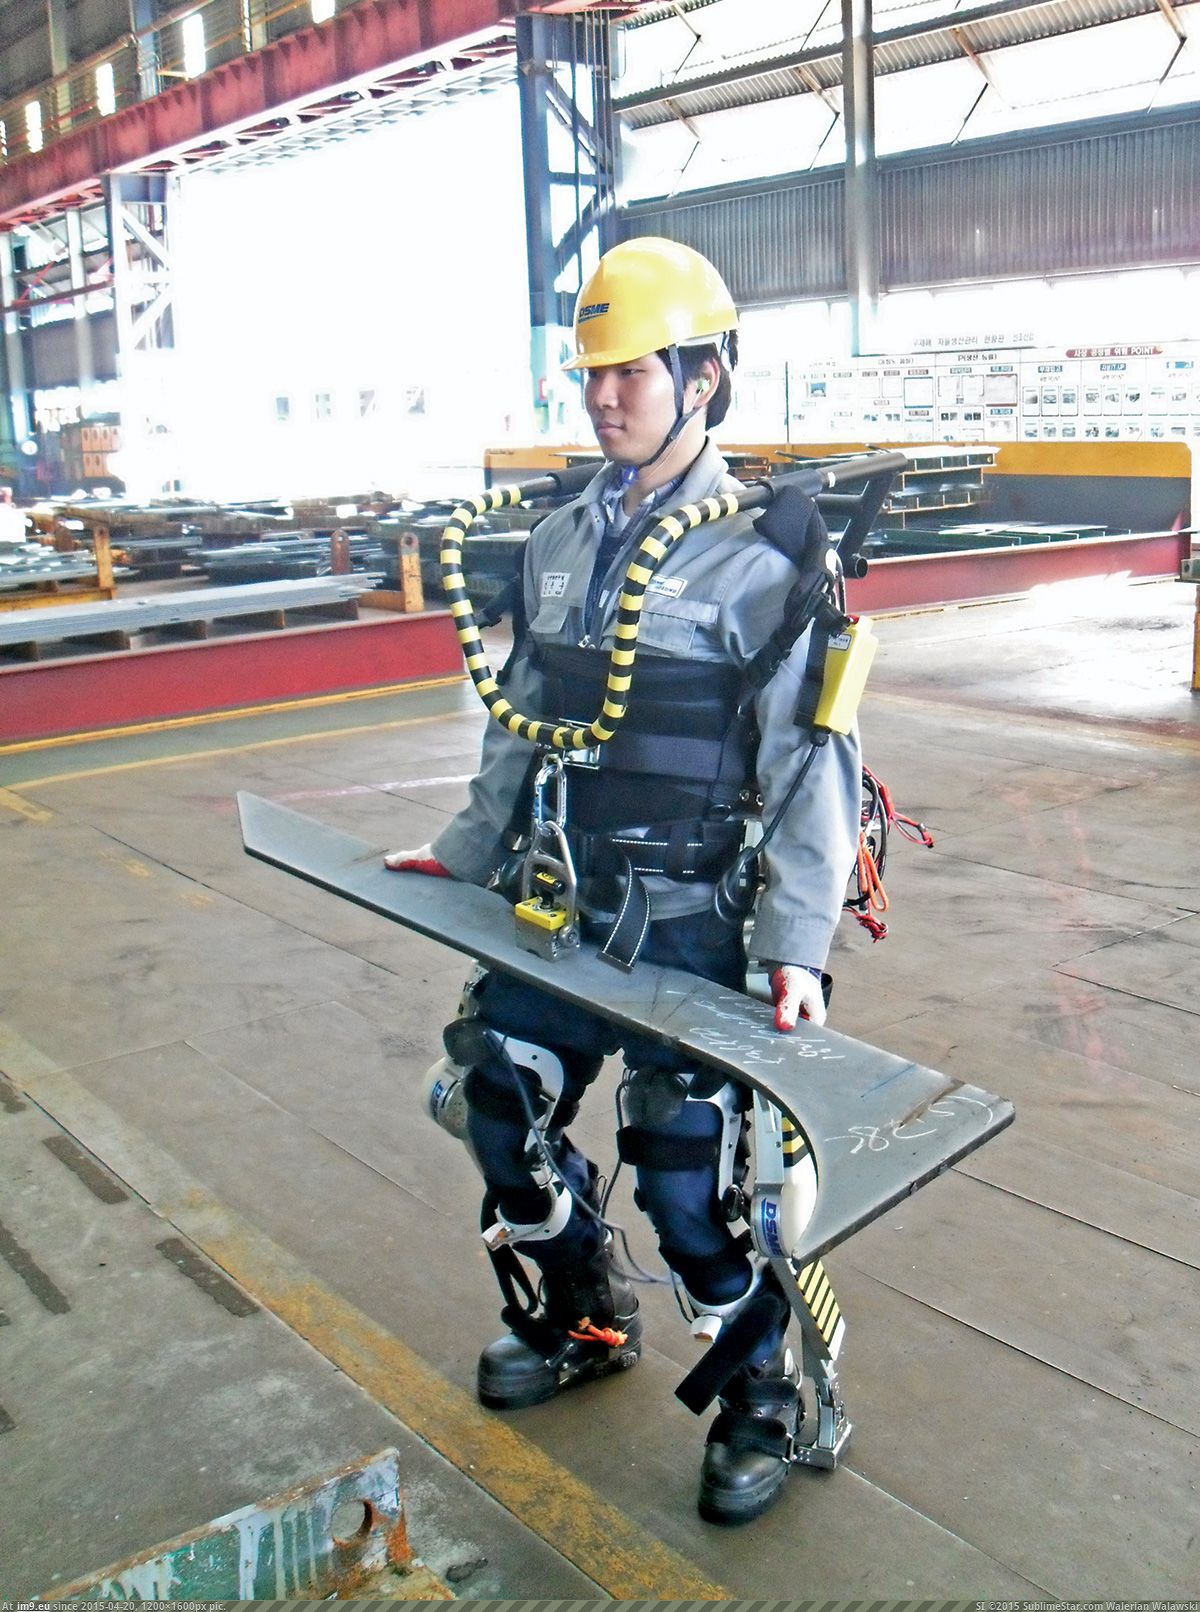 [Pics] A South Korean shipyard worker (in My r/PICS favs)